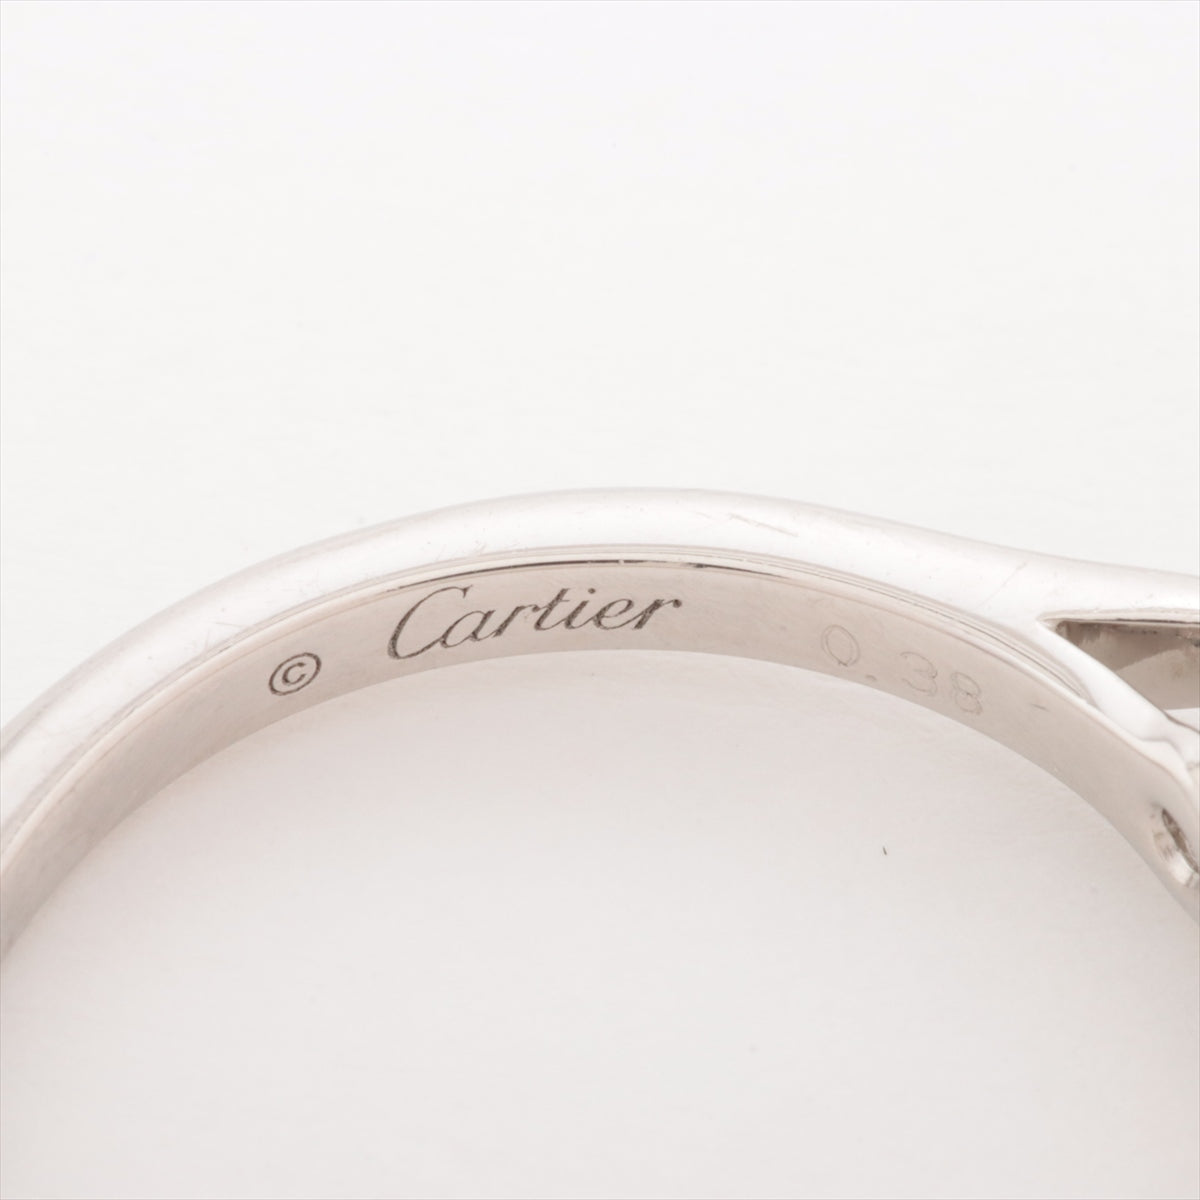 Cartier Solitaire 1895 Diamond Ring Pt950 3.8g 0.38 G VVS2 3EX NONE 53 CRN4139153